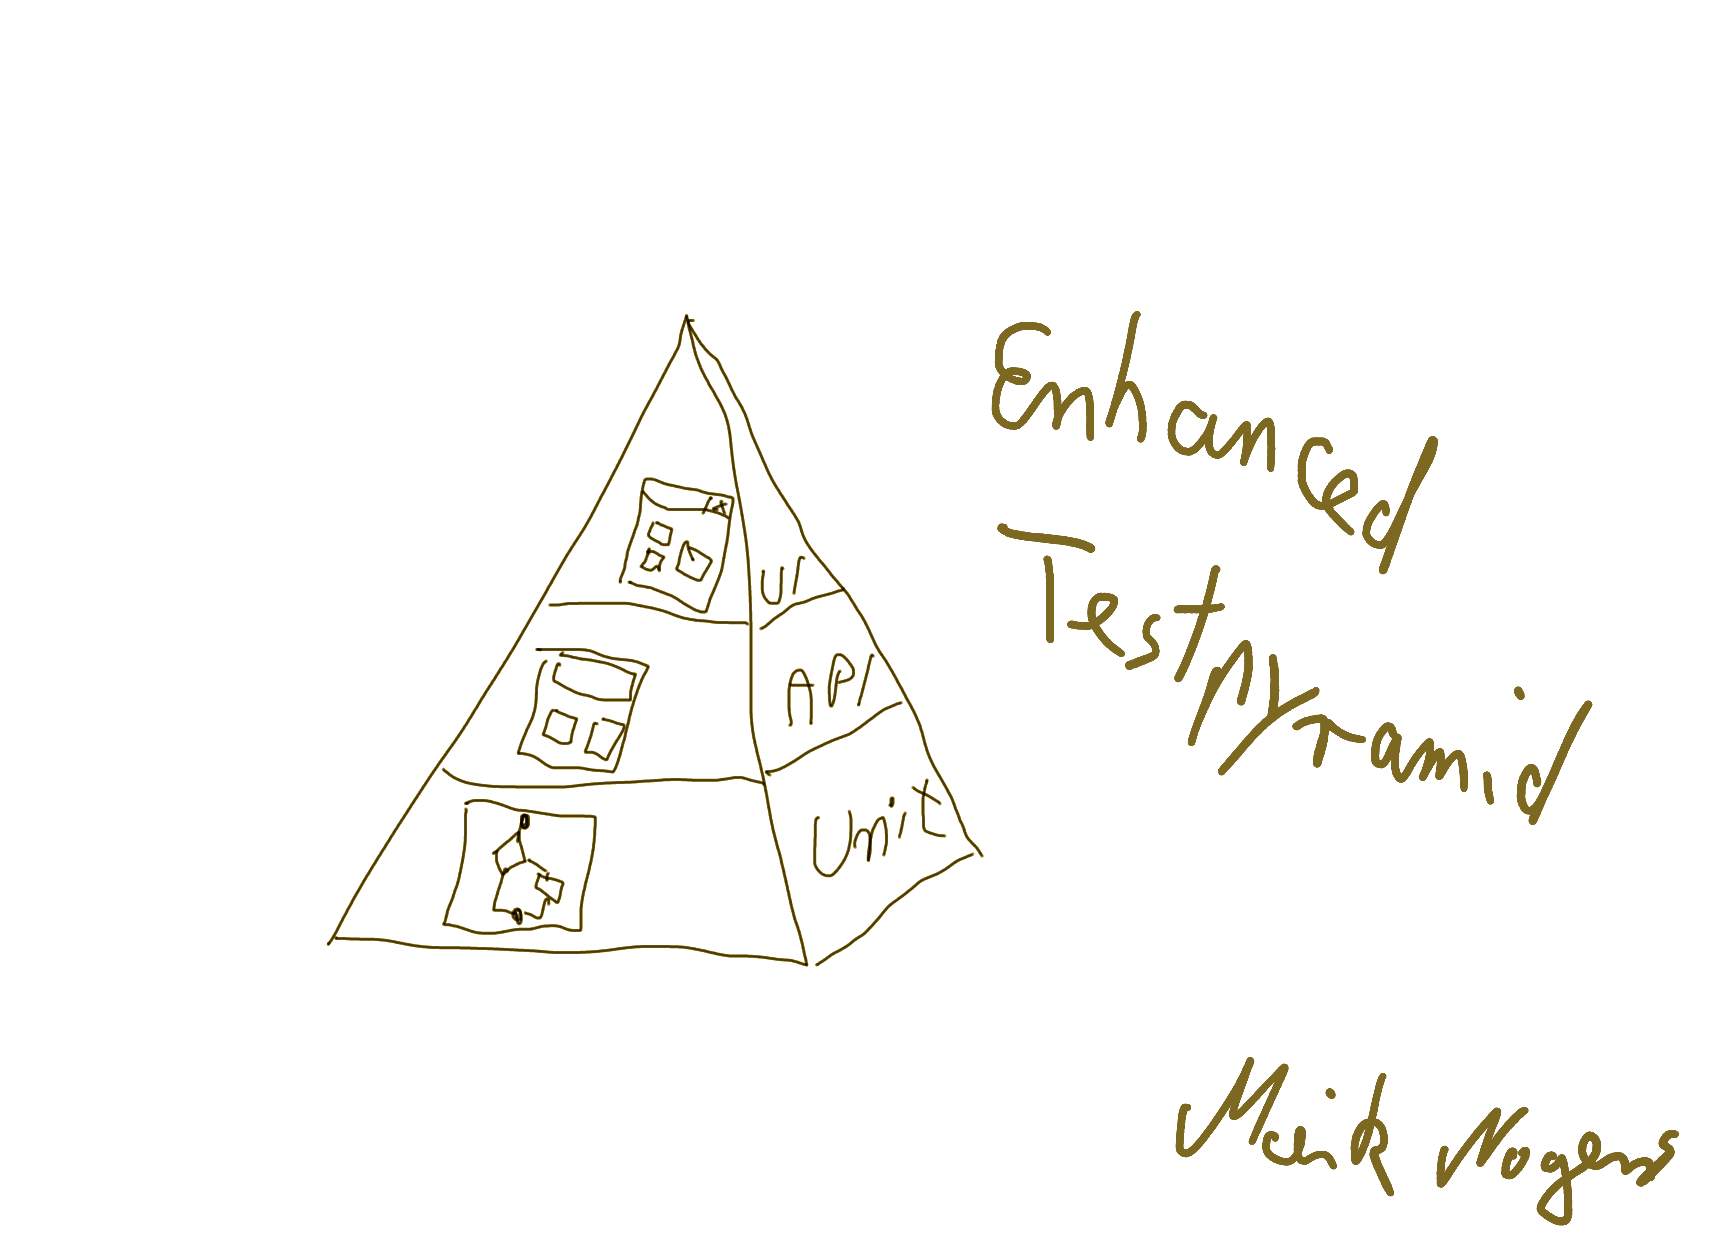 Enhanced Test pyramid by Maik Nogens